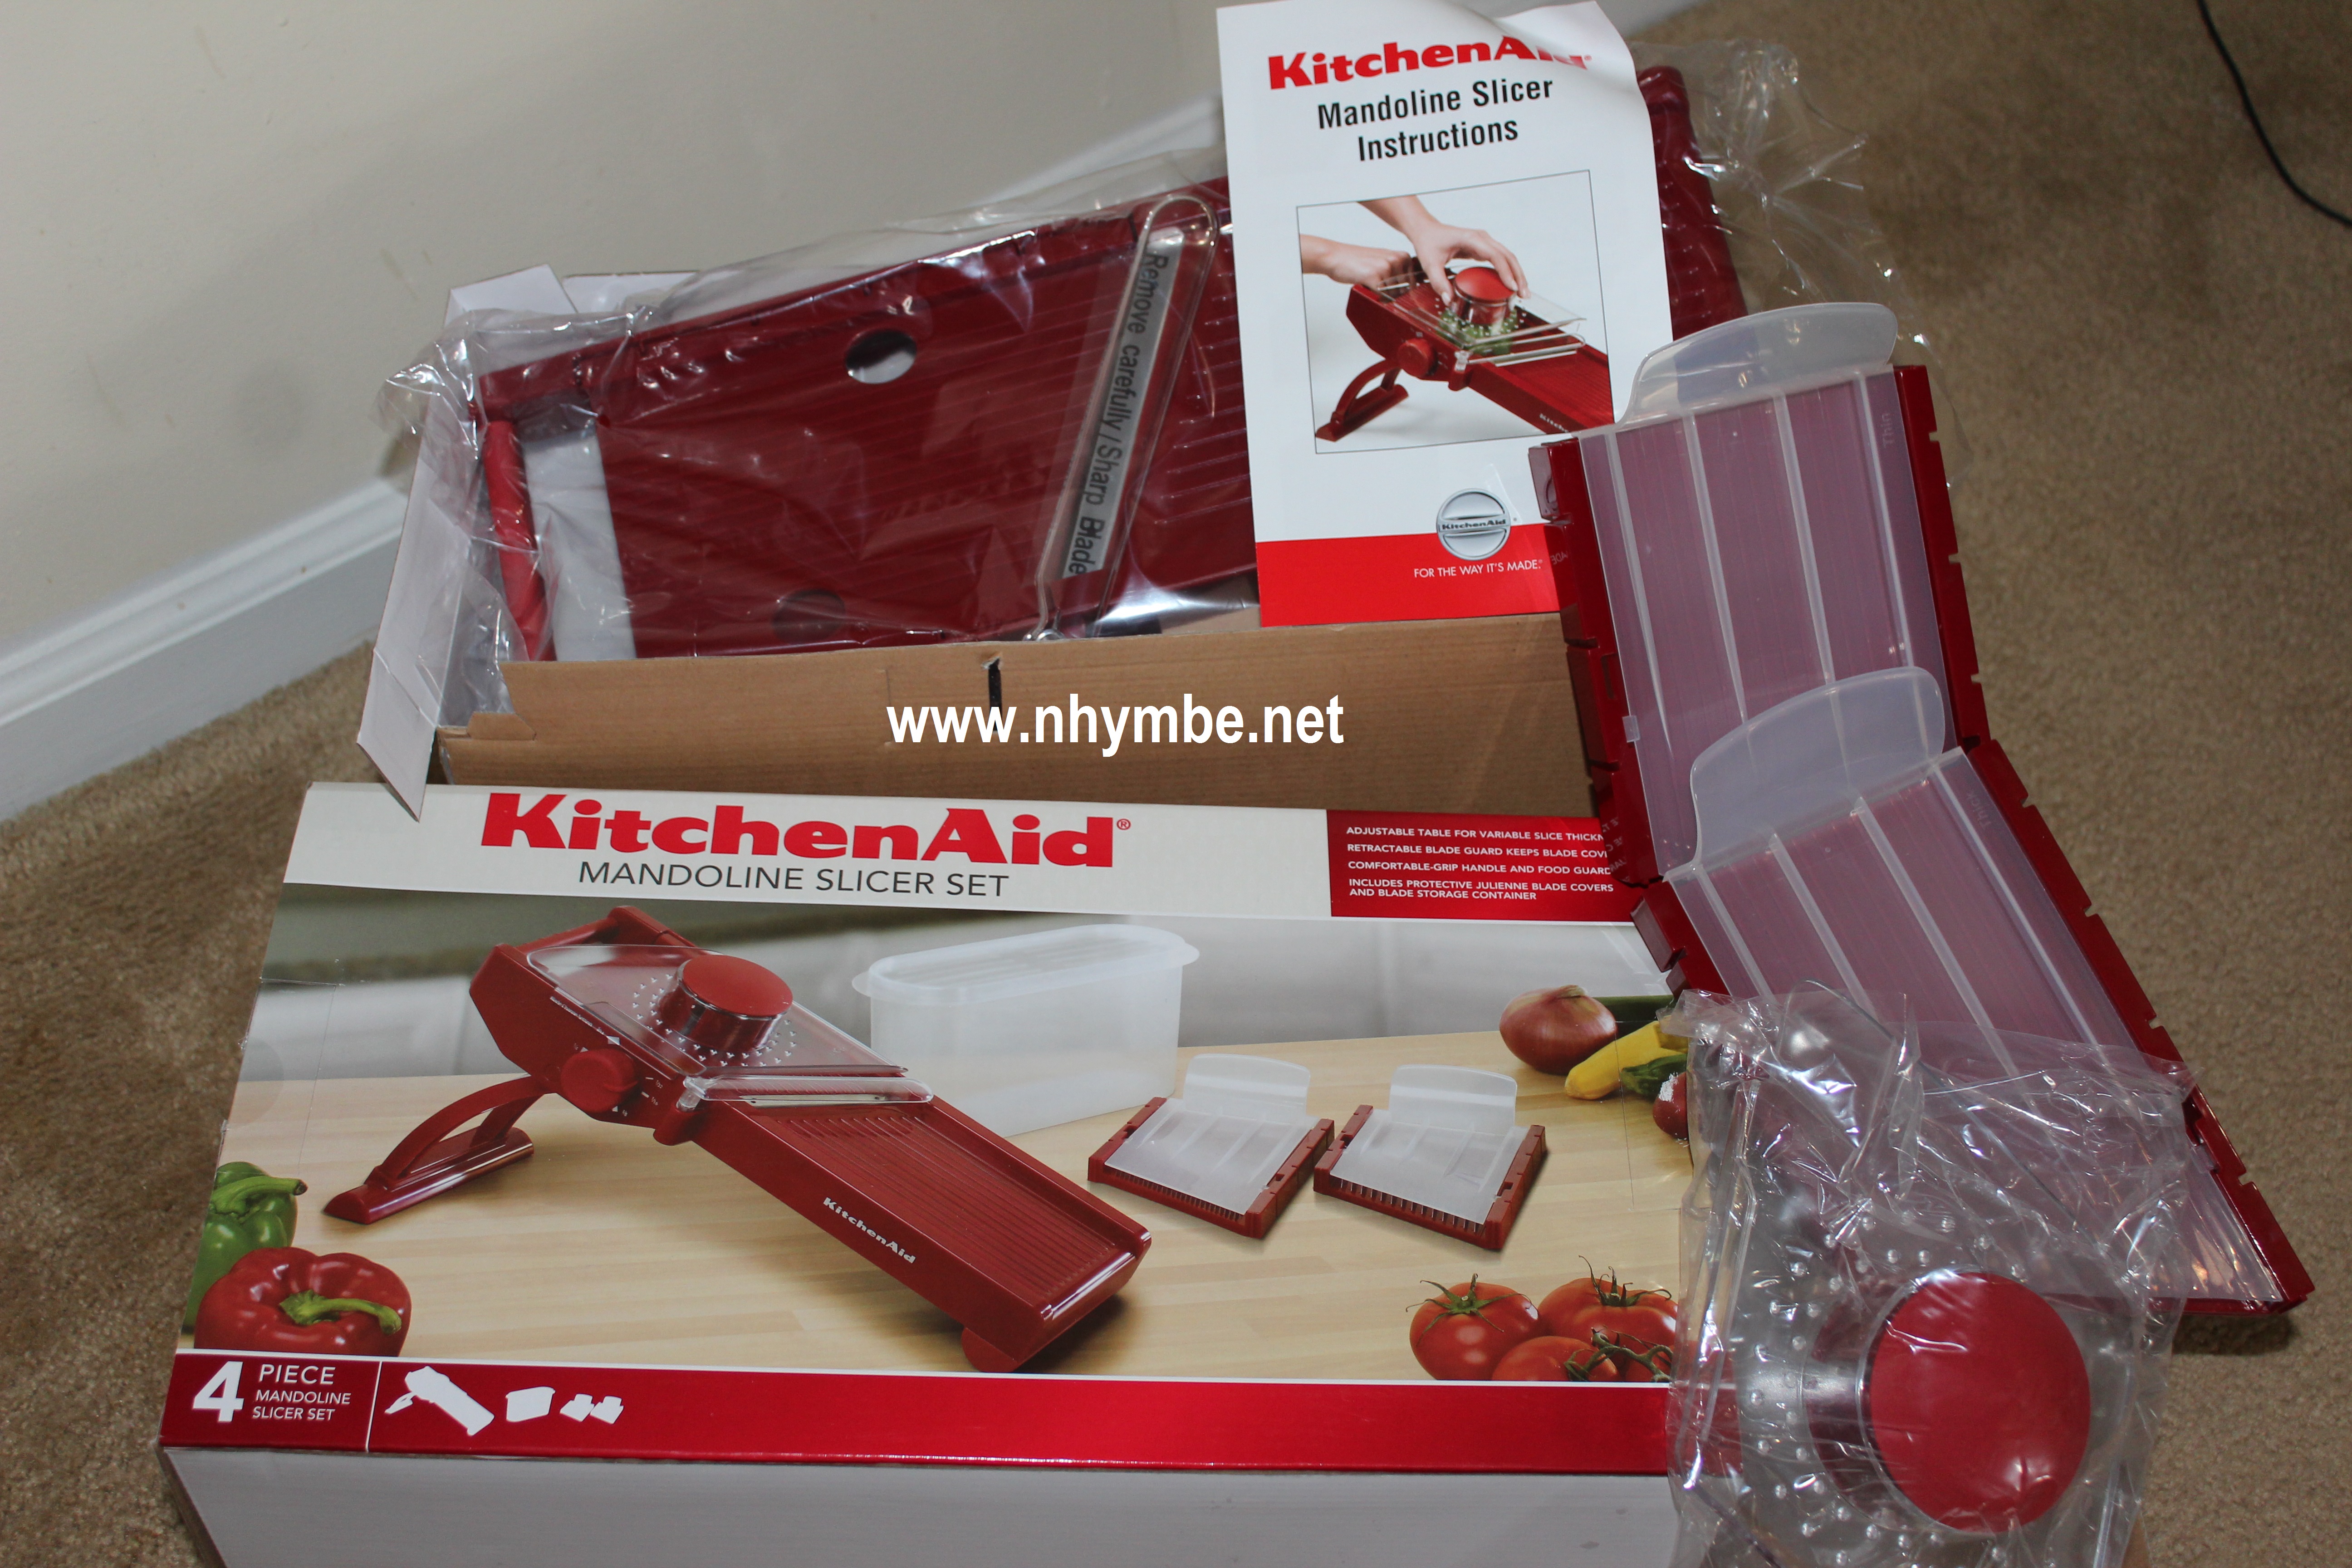 http://nhymbe.net/wp-content/uploads/2013/08/kitchen-aid-mandoline-slicer-set.jpg